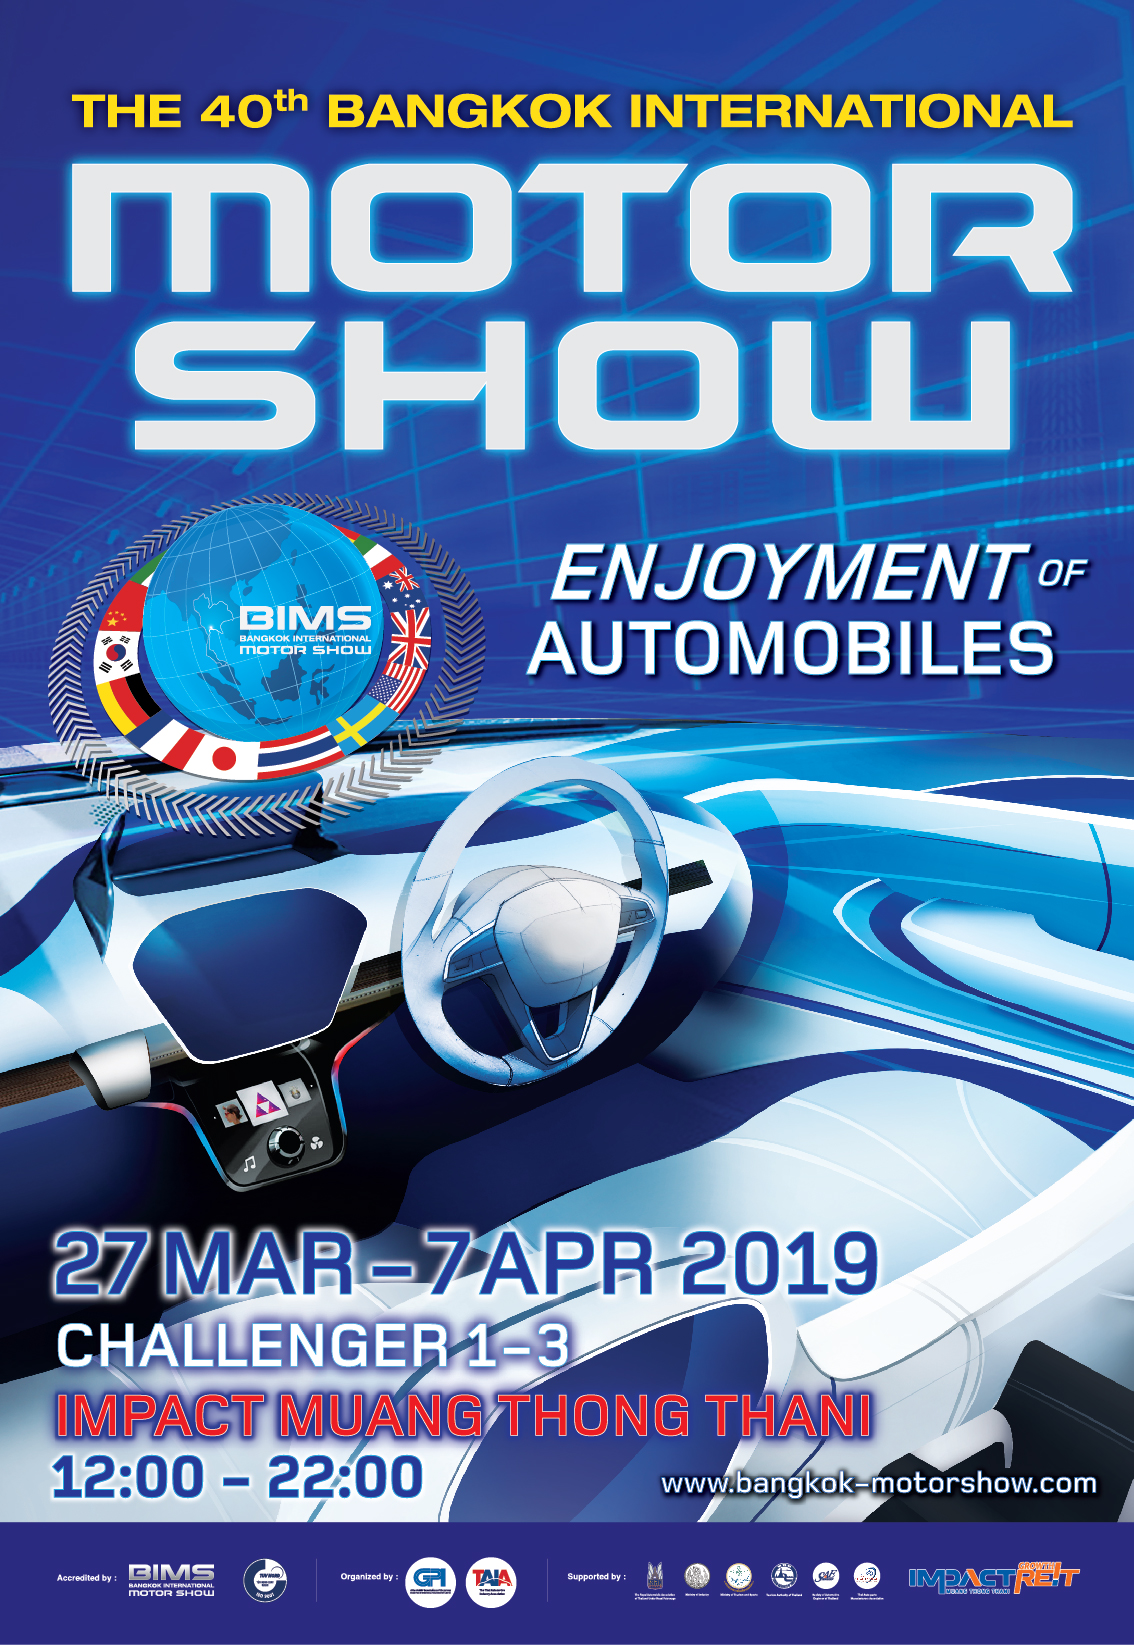 The 40th Bangkok International Motor Show 2019